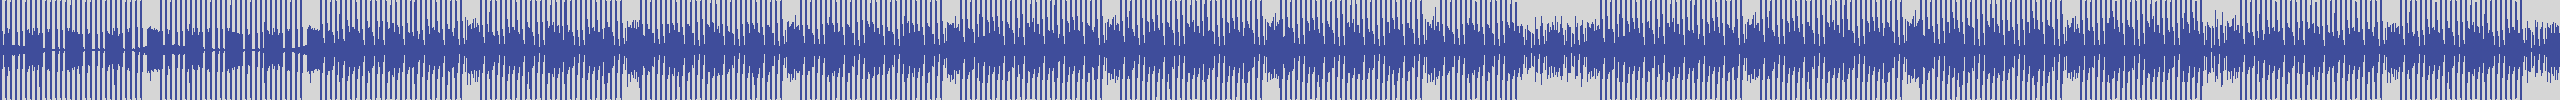 nf_boyz_records [NFY019] Fresh - Trasparence [Tech Arsenal Mix] audio wave form